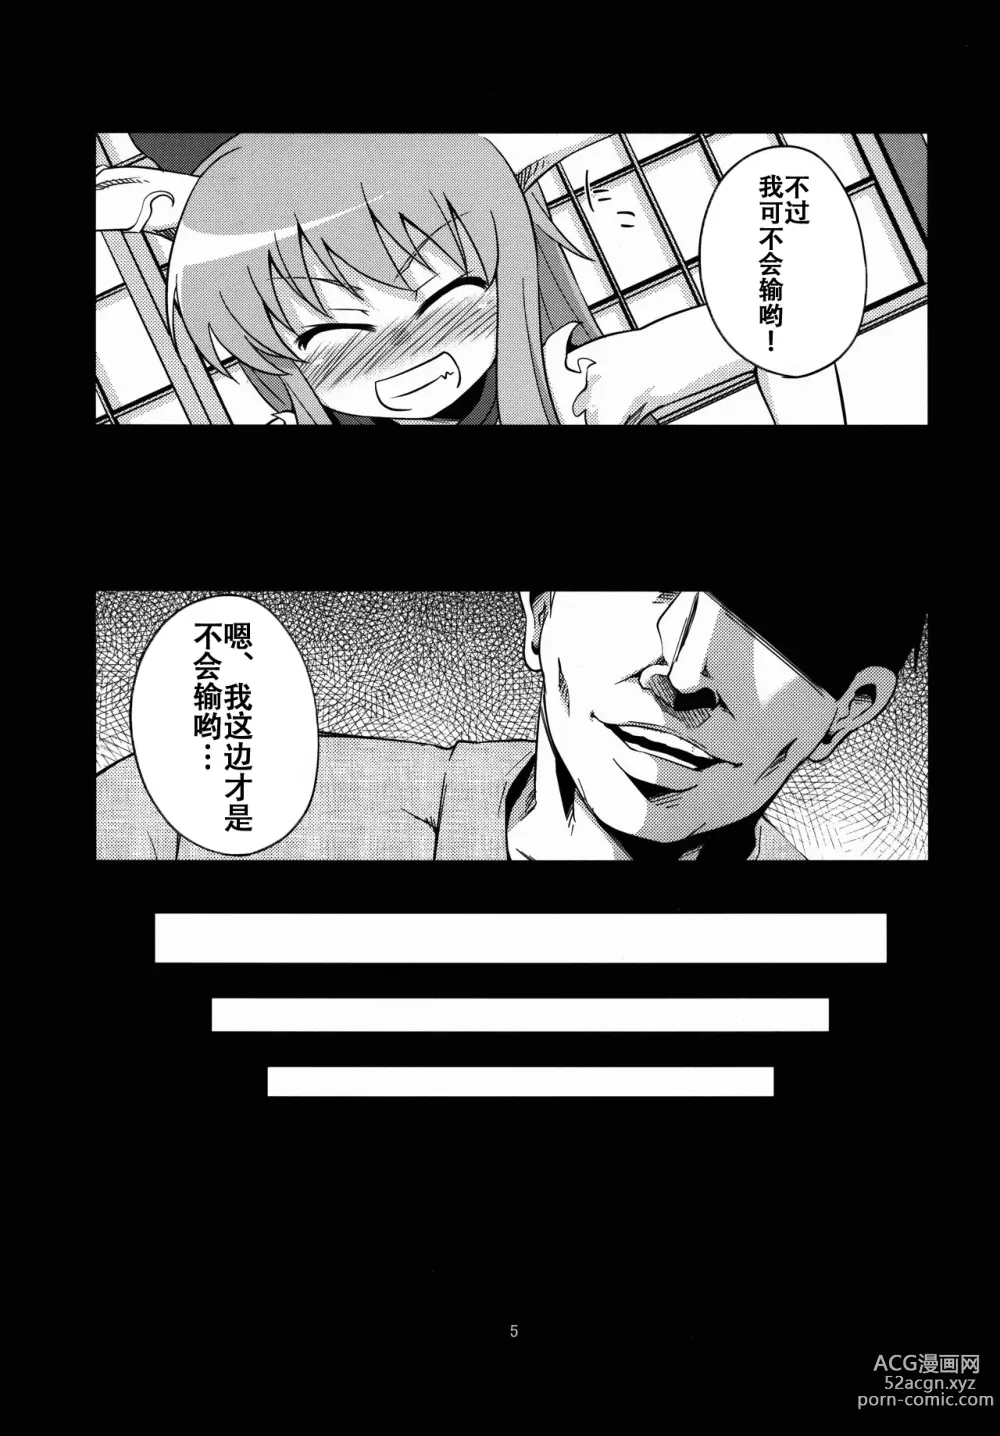 Page 5 of doujinshi Oni Hankyo Hanki